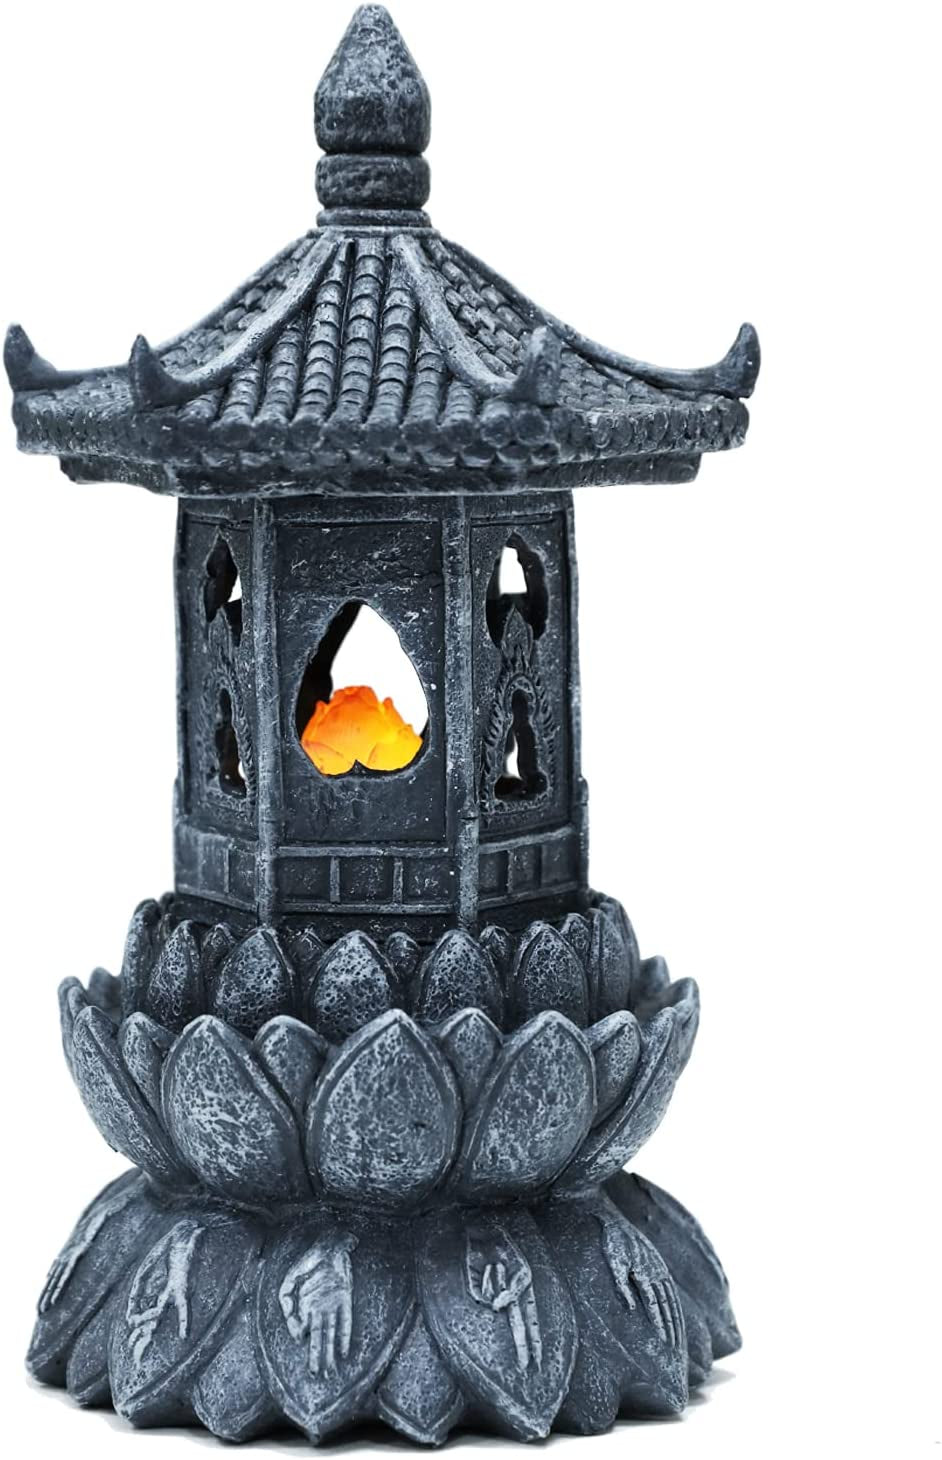 MIBUNG, MIBUNG Solar Pagoda Lantern Outdoor Statue, Buddha Pagoda Sculpture with Solar Lotus Light, Asian Decor Zen Garden Art Japanese Temple Pagoda Lamp for Patio Yard Lawn Home Decorations, Ornament Gift